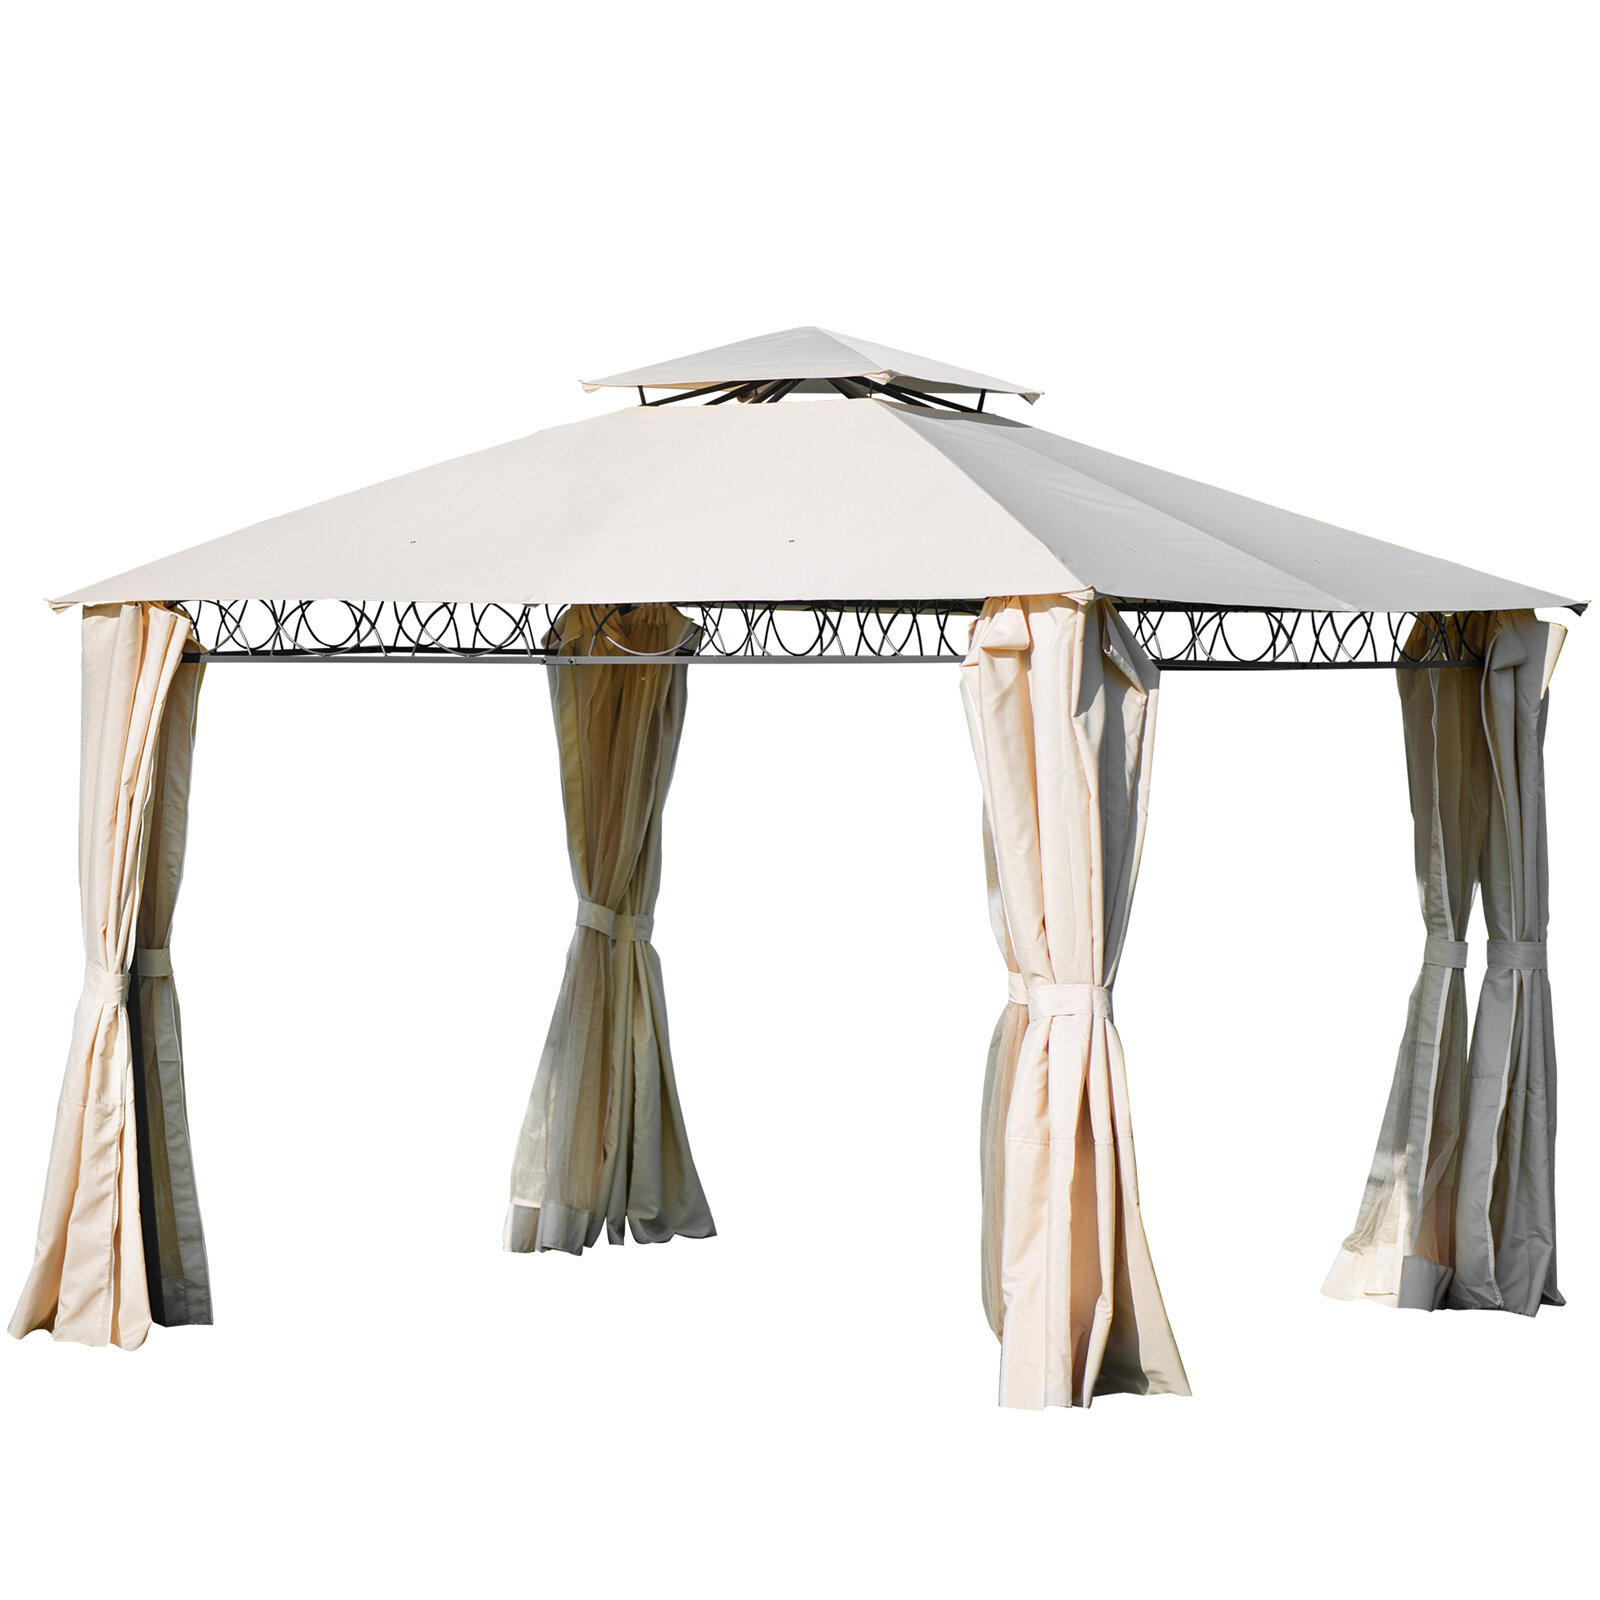 4 x 4m Pop up Outdoor Garden Gazebo Canopy Party Tent Patio Shelt 2-Tier Roof 